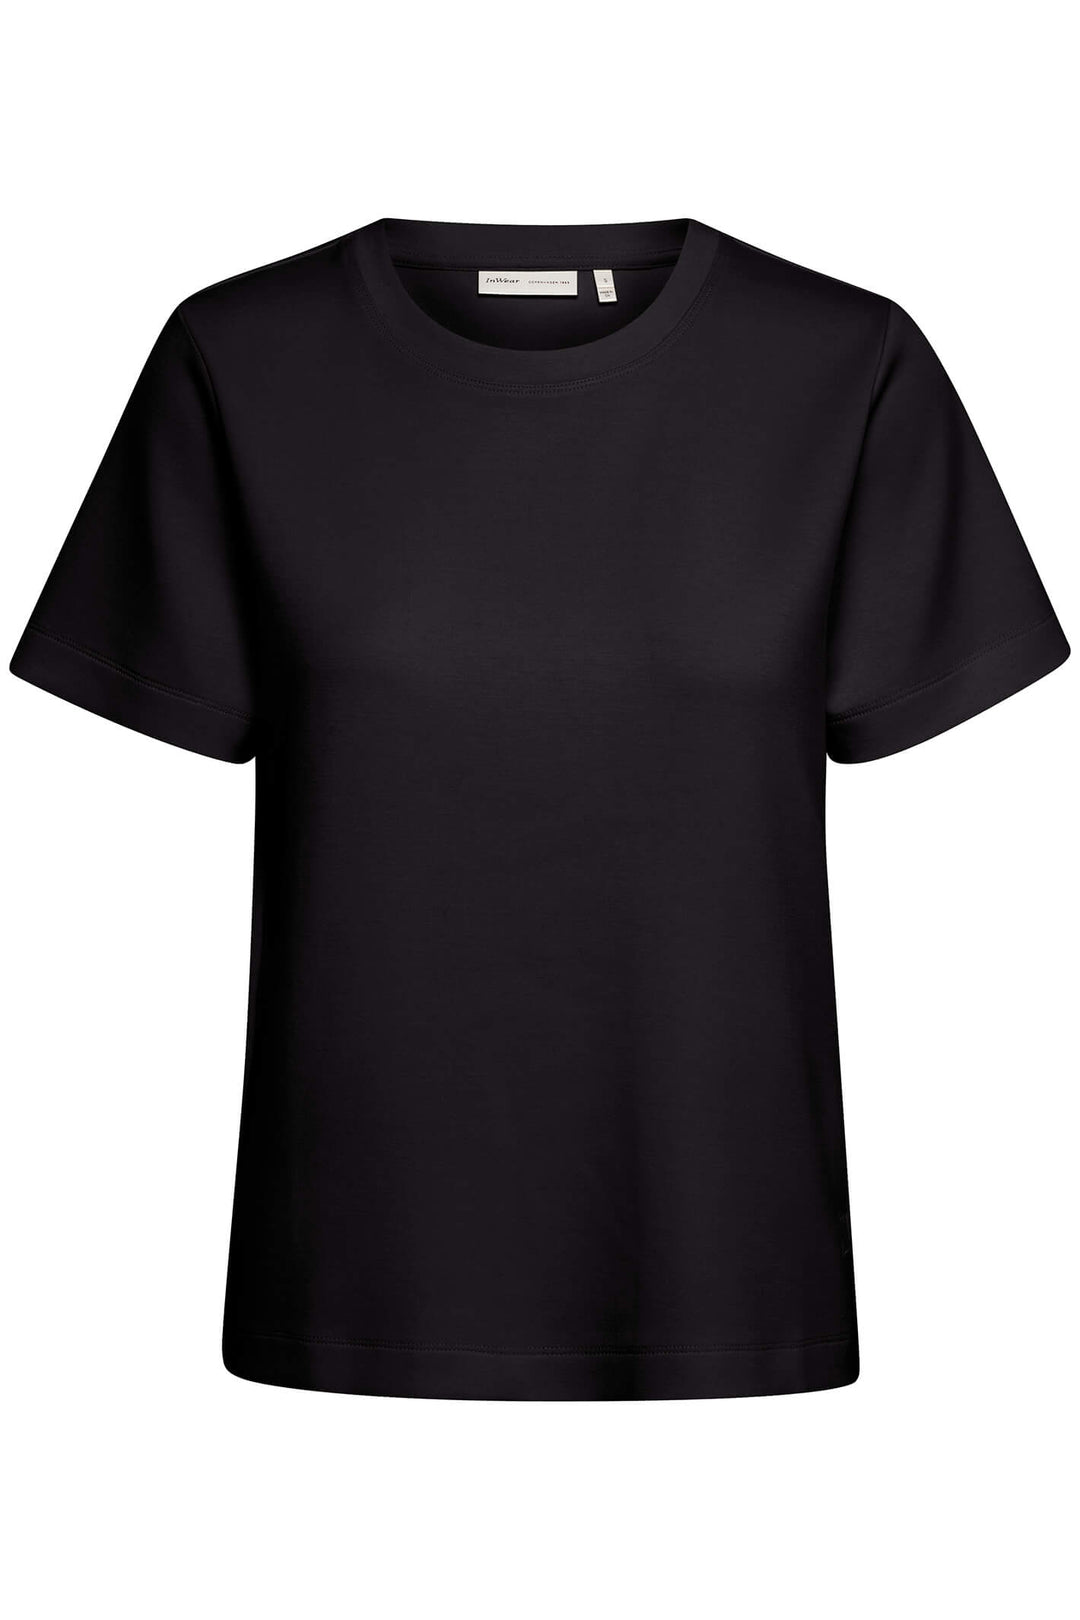 InWear 30106201 194008 Vincent Karmen Black T-Shirt - Shirley Allum Boutique